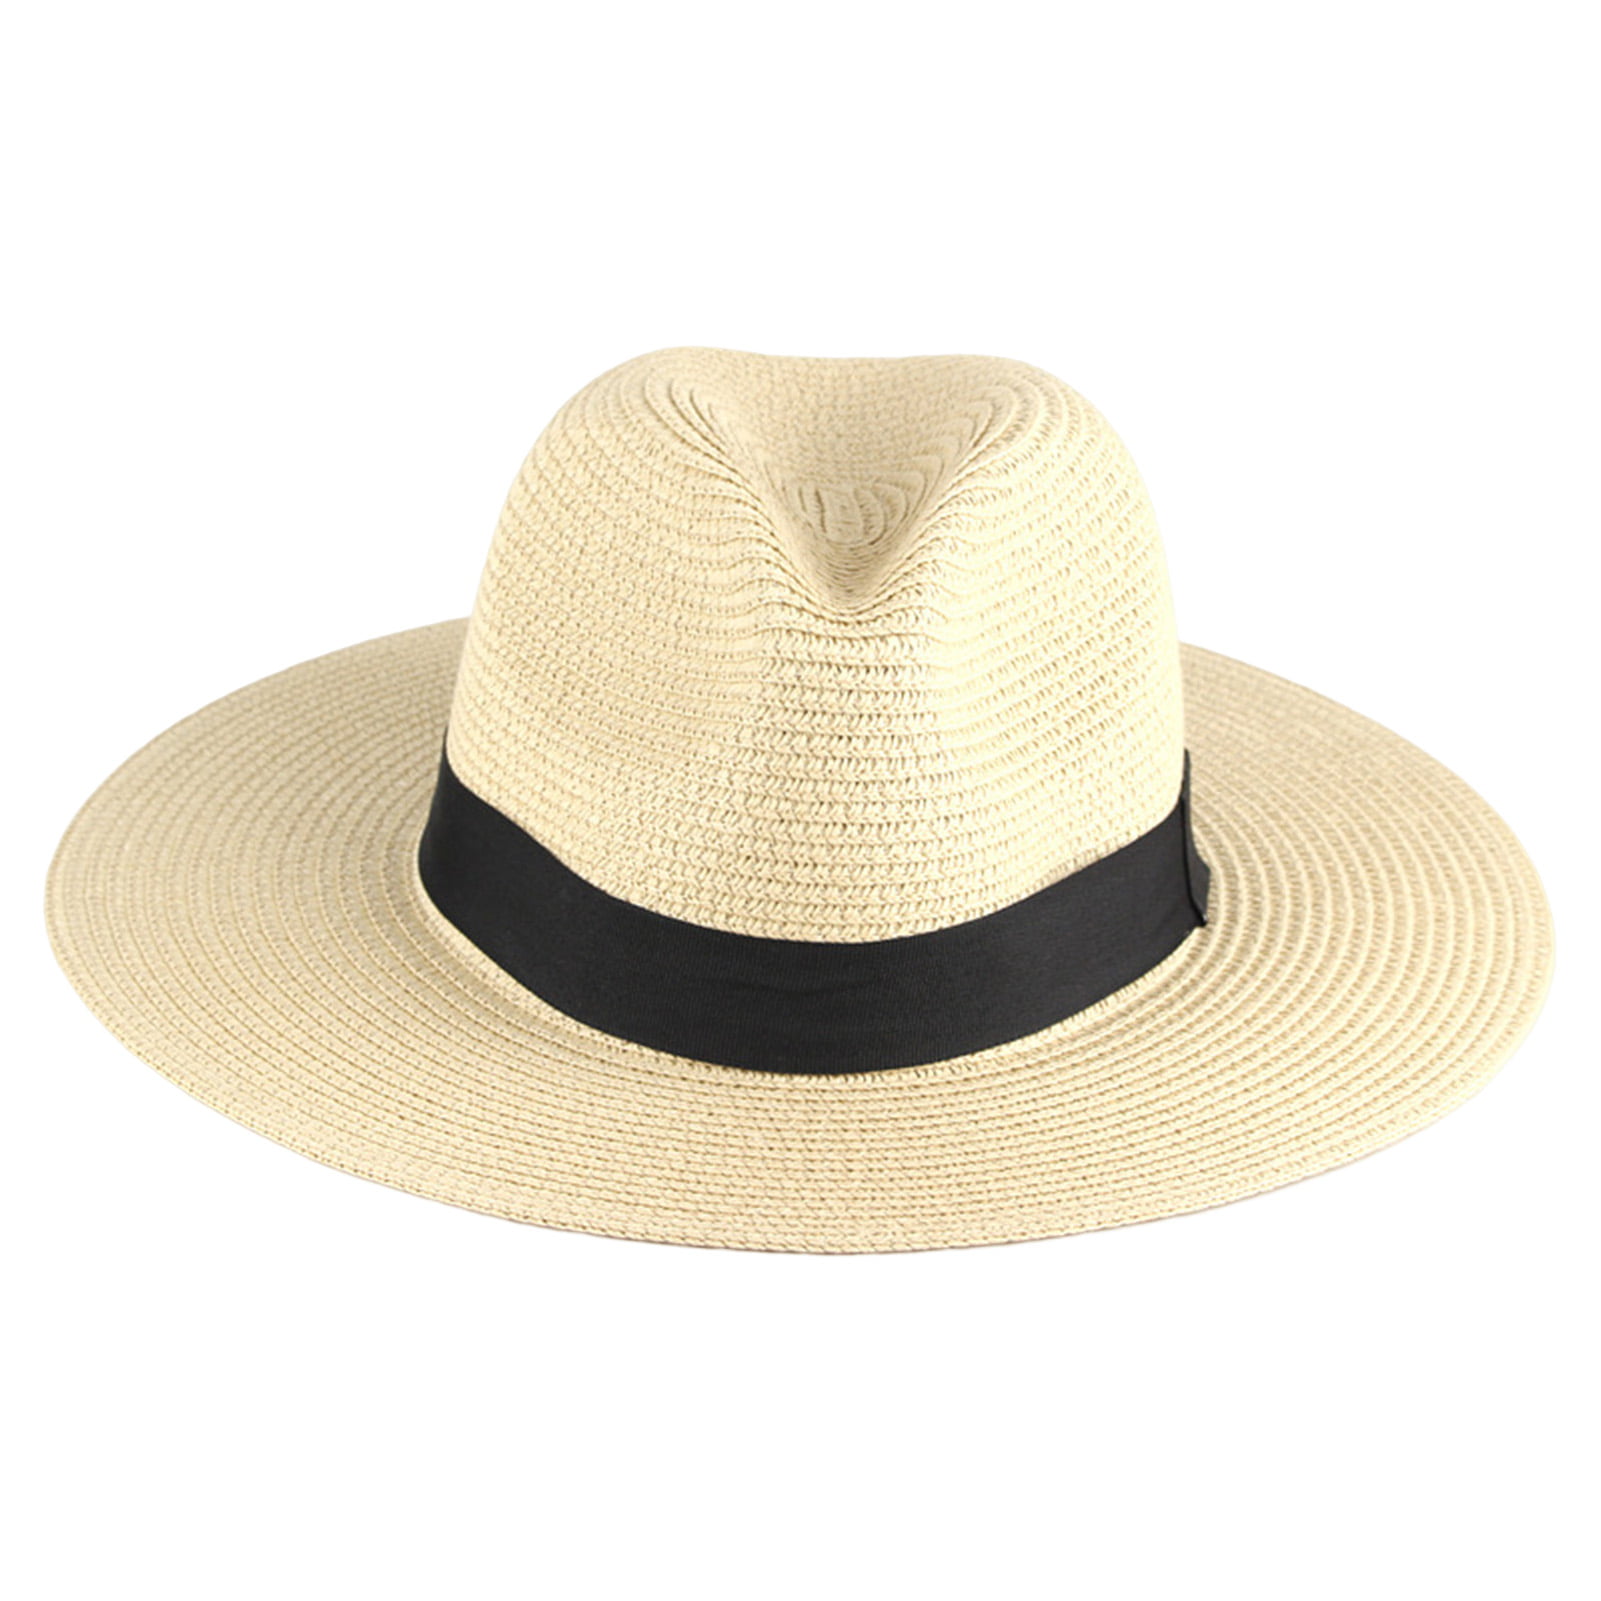 Hats for Women - Summer Beach Straw Hat, Wide Brim Sun Hat UV Protection UPF  50+, Floppy Packable Fedora Hat - Men's Anti Sun Boater Hat 